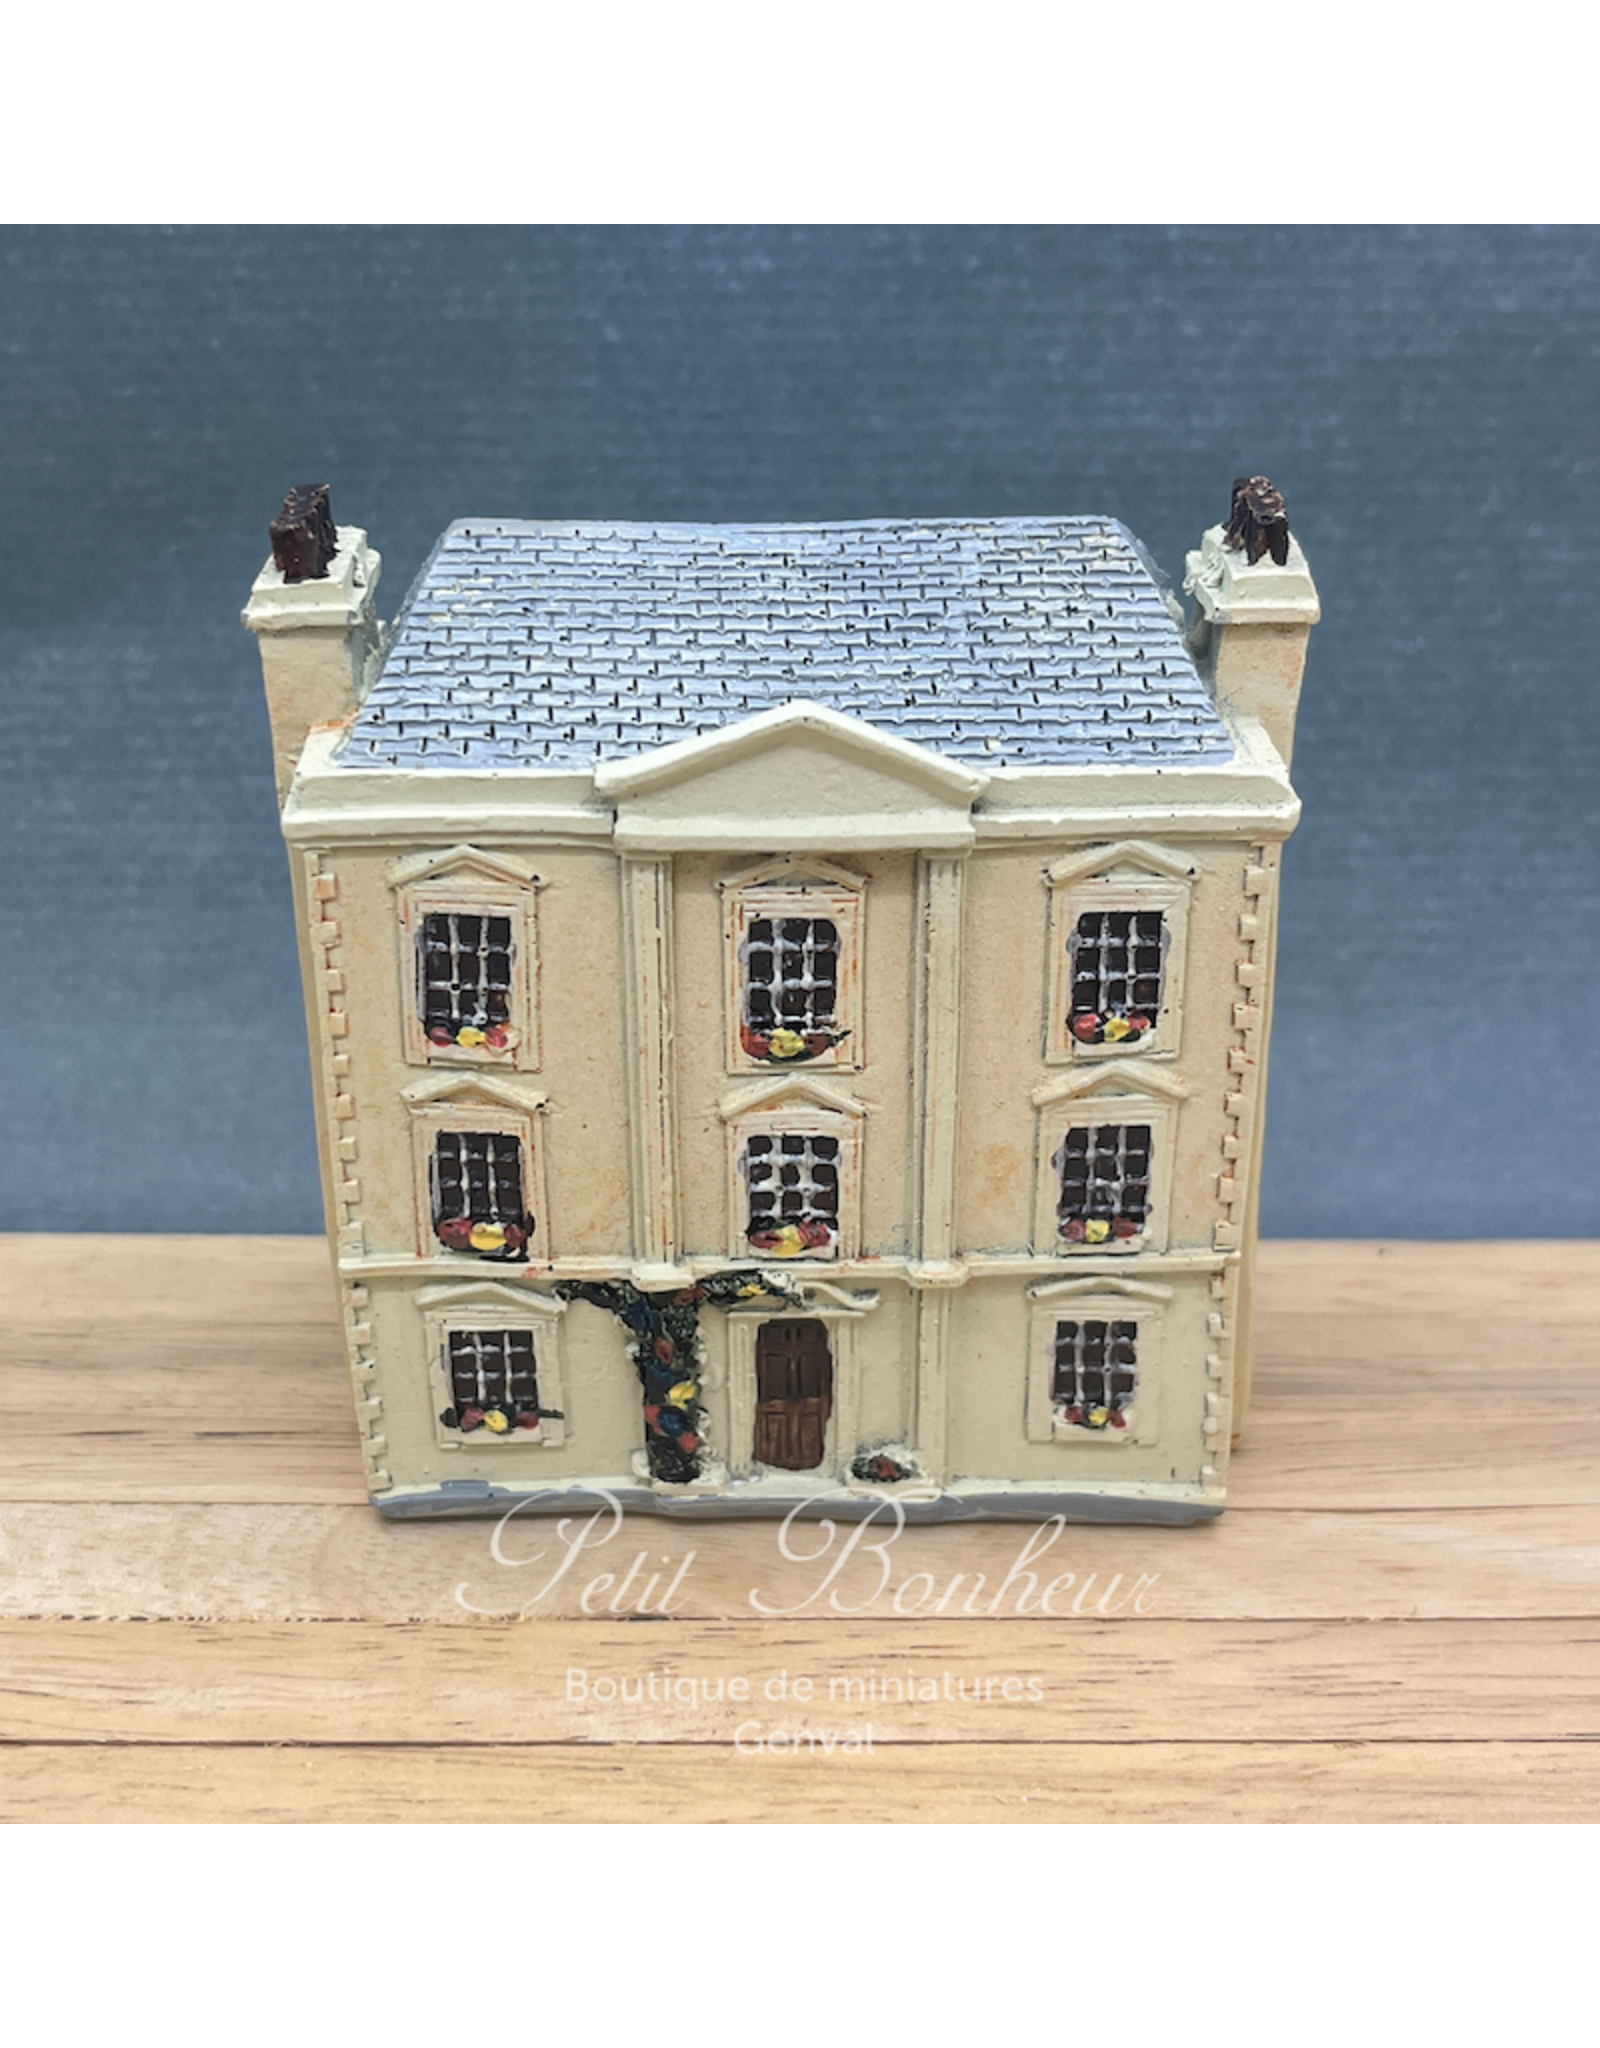 Maison miniature "Montgomery"